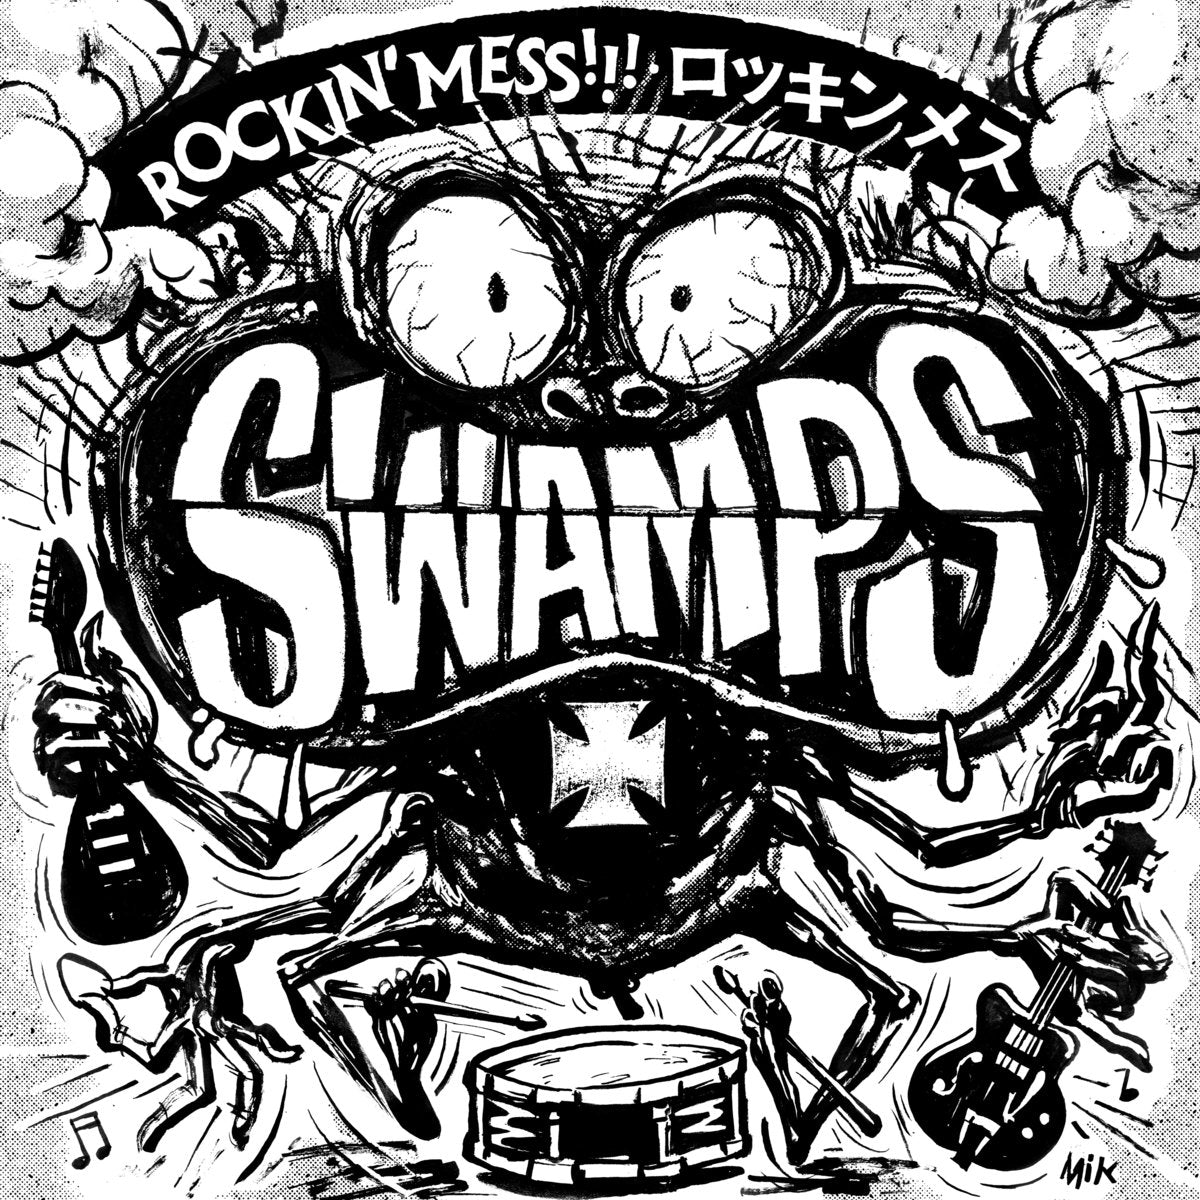 Swamps- Rockin’ Mess CD ~GROOVIE RECORDS!